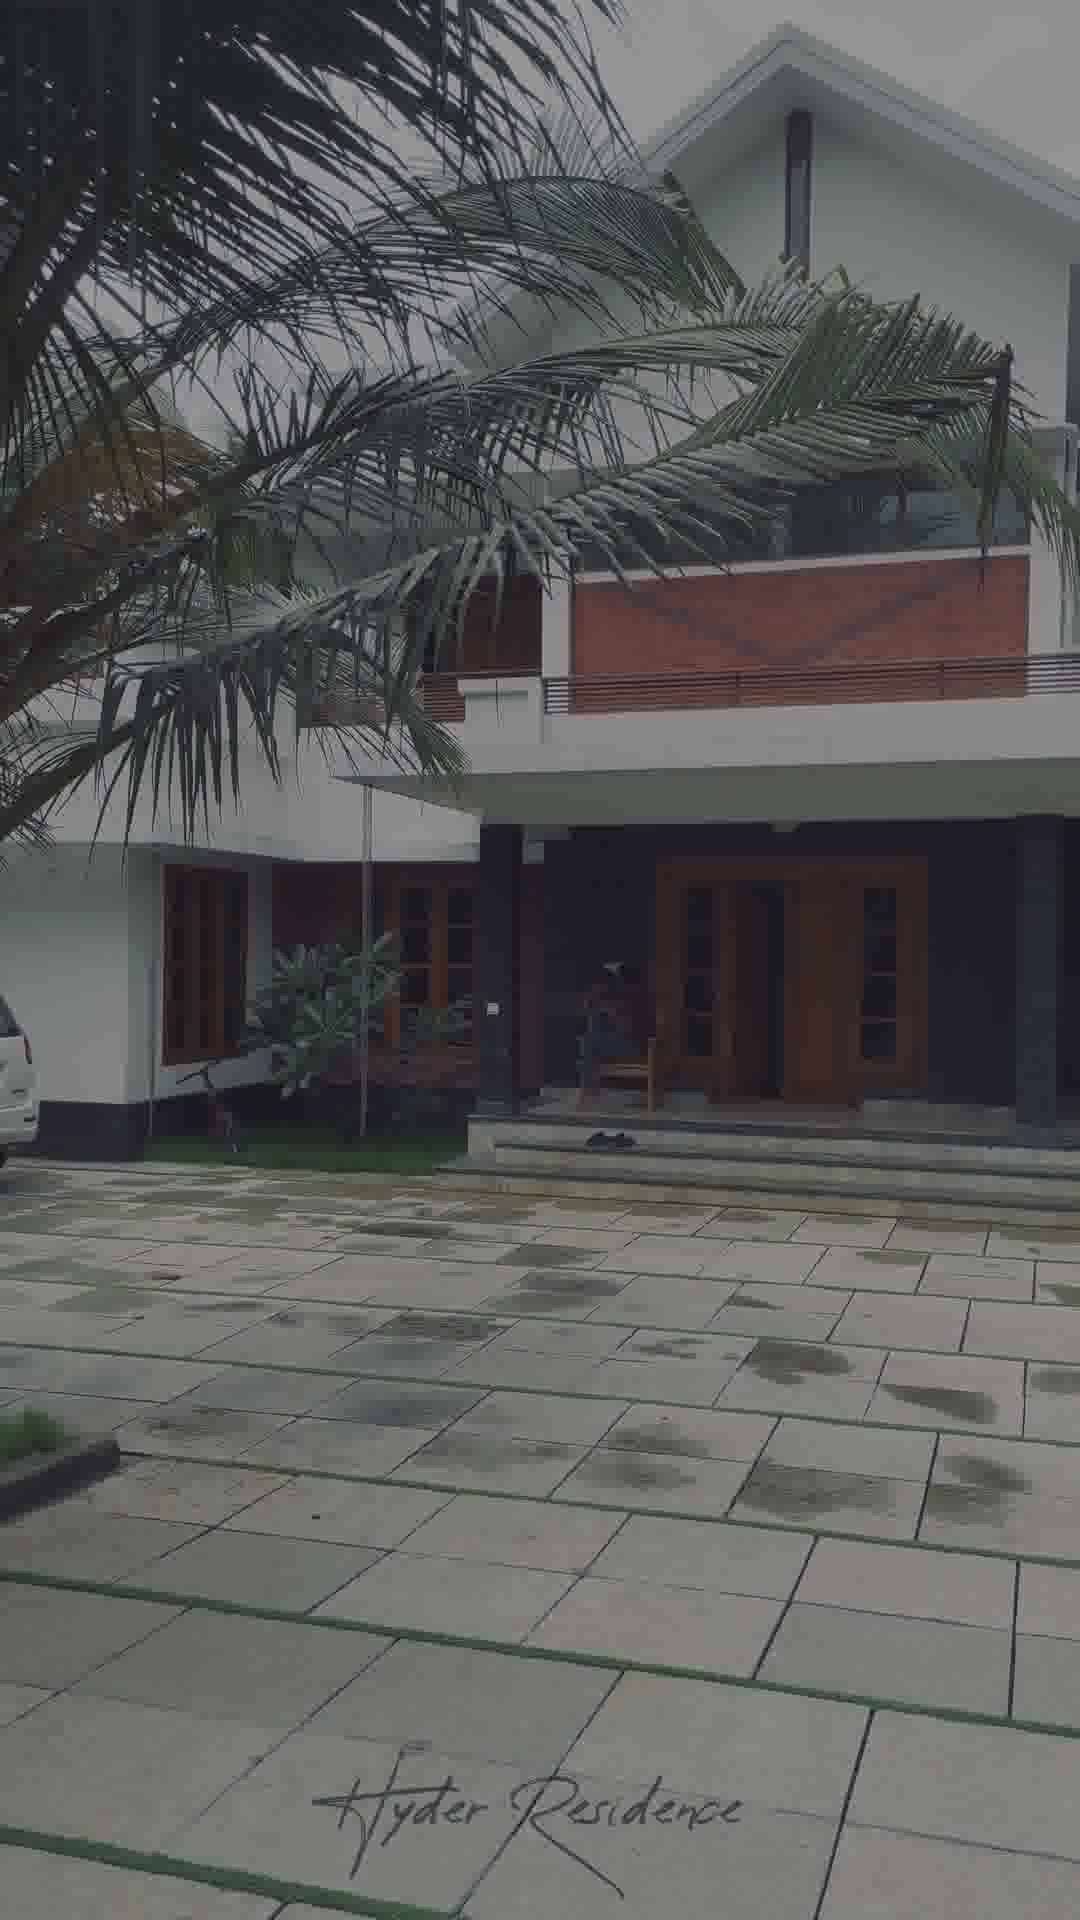 80 Lakhs | 2900 Sqft

Client name: hyder bin moidu
Budget: 80 Lakhs
Area: 2900 Sqft
Plot area: 19 Cent
Location: Naduvattom , Edappal

Architect: Ar. Ashfaque Shahil
Firm: Avarde studio
Instagram ID: @avarde.studio
Location: Calicut

Photographer: Ar.Ashfaque shahil
Instagram ID:  @avarde.frames

Kolo - India’s Largest Home Construction Community 🏠

#fyp #reelitfeelit #koloapp #veedu #homedecor #enteveedu #homedesign #keralahomedesignz #nattiloruveedu #instagood #interiordesign #interior #interiordesigner #homedecoration #homedesign #home #homedesignideas #keralahomes #homedecor #homes #homestyling #traditional #kerala #homesweethome #architecturedesign #architecture #keralaarchitecture #architecture #modernarchitecture